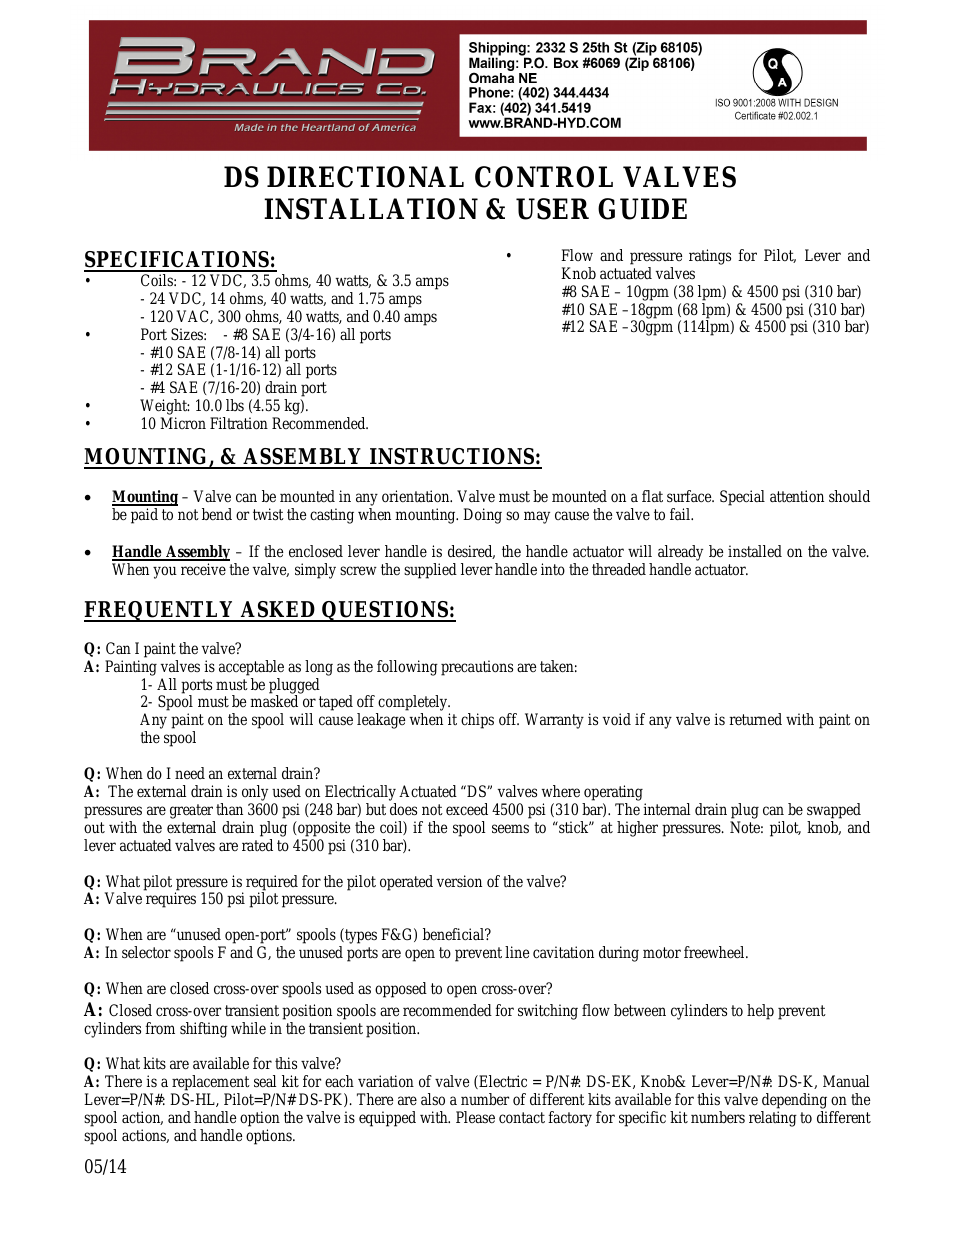 DS DIRECTIONAL CONTROL VALVES